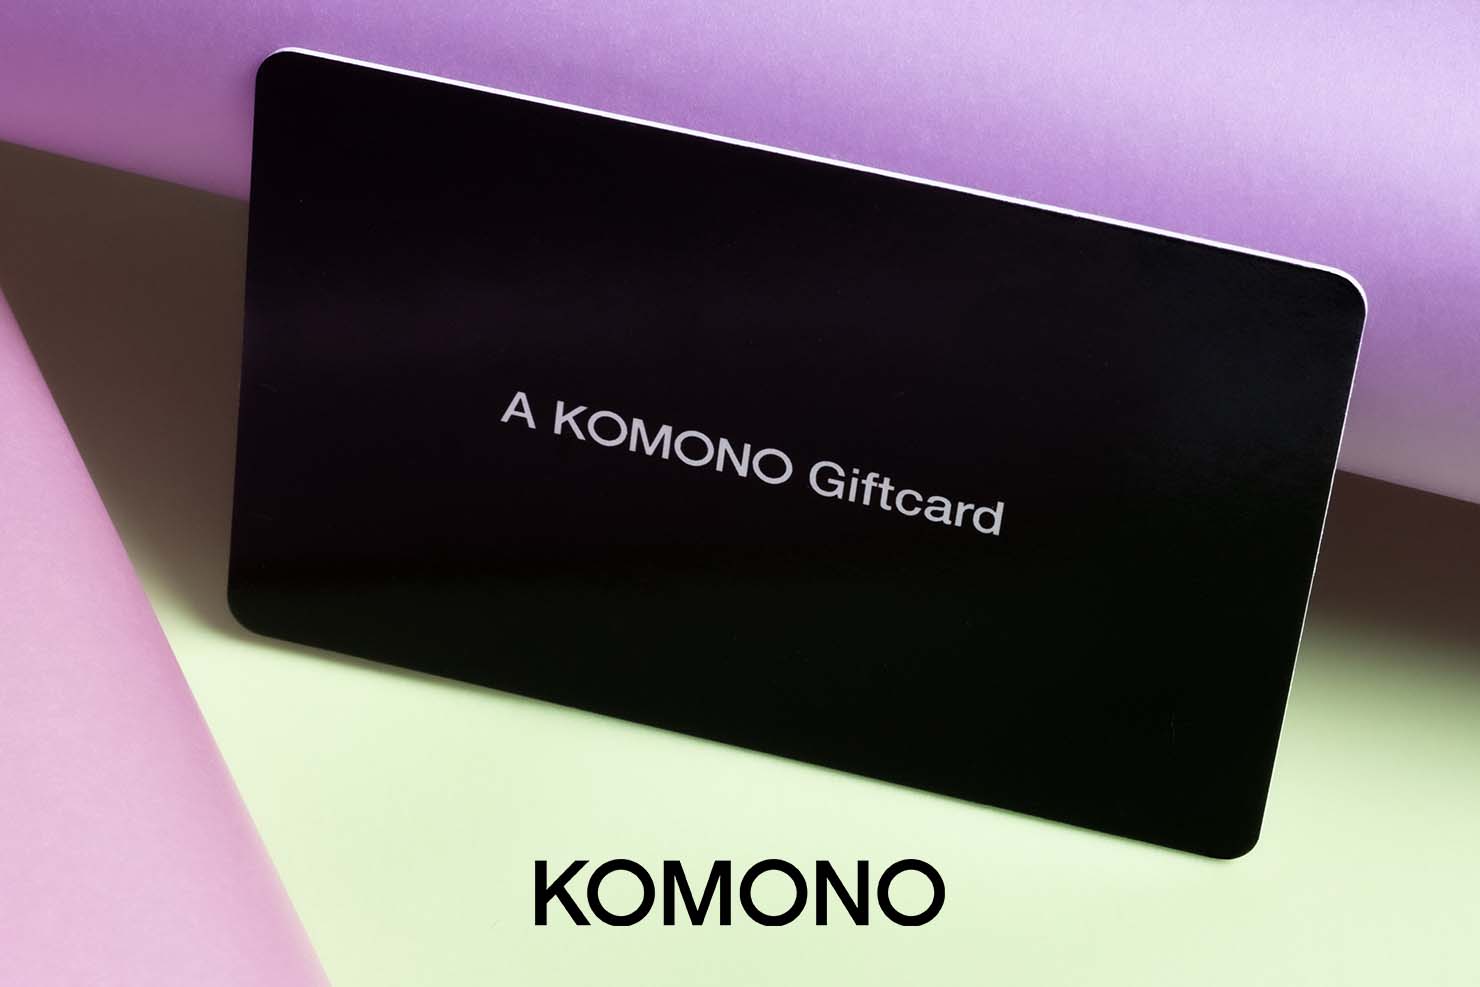 Komono GiftCard19 2